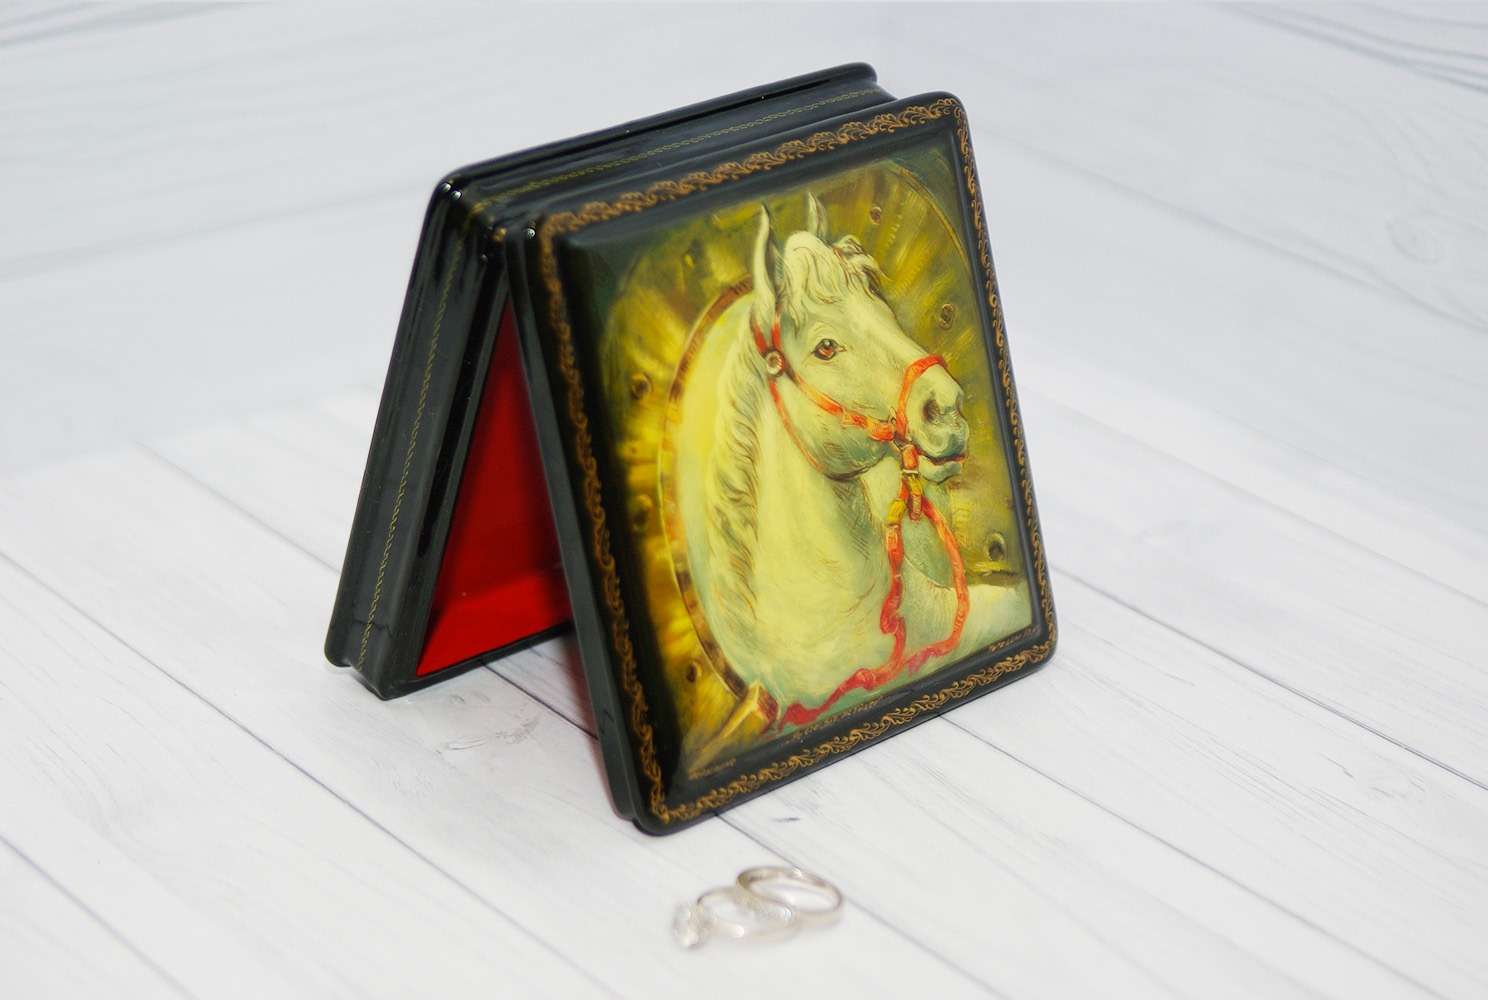 Highly-artistic jewelry box "Horse". Nacreous inlays